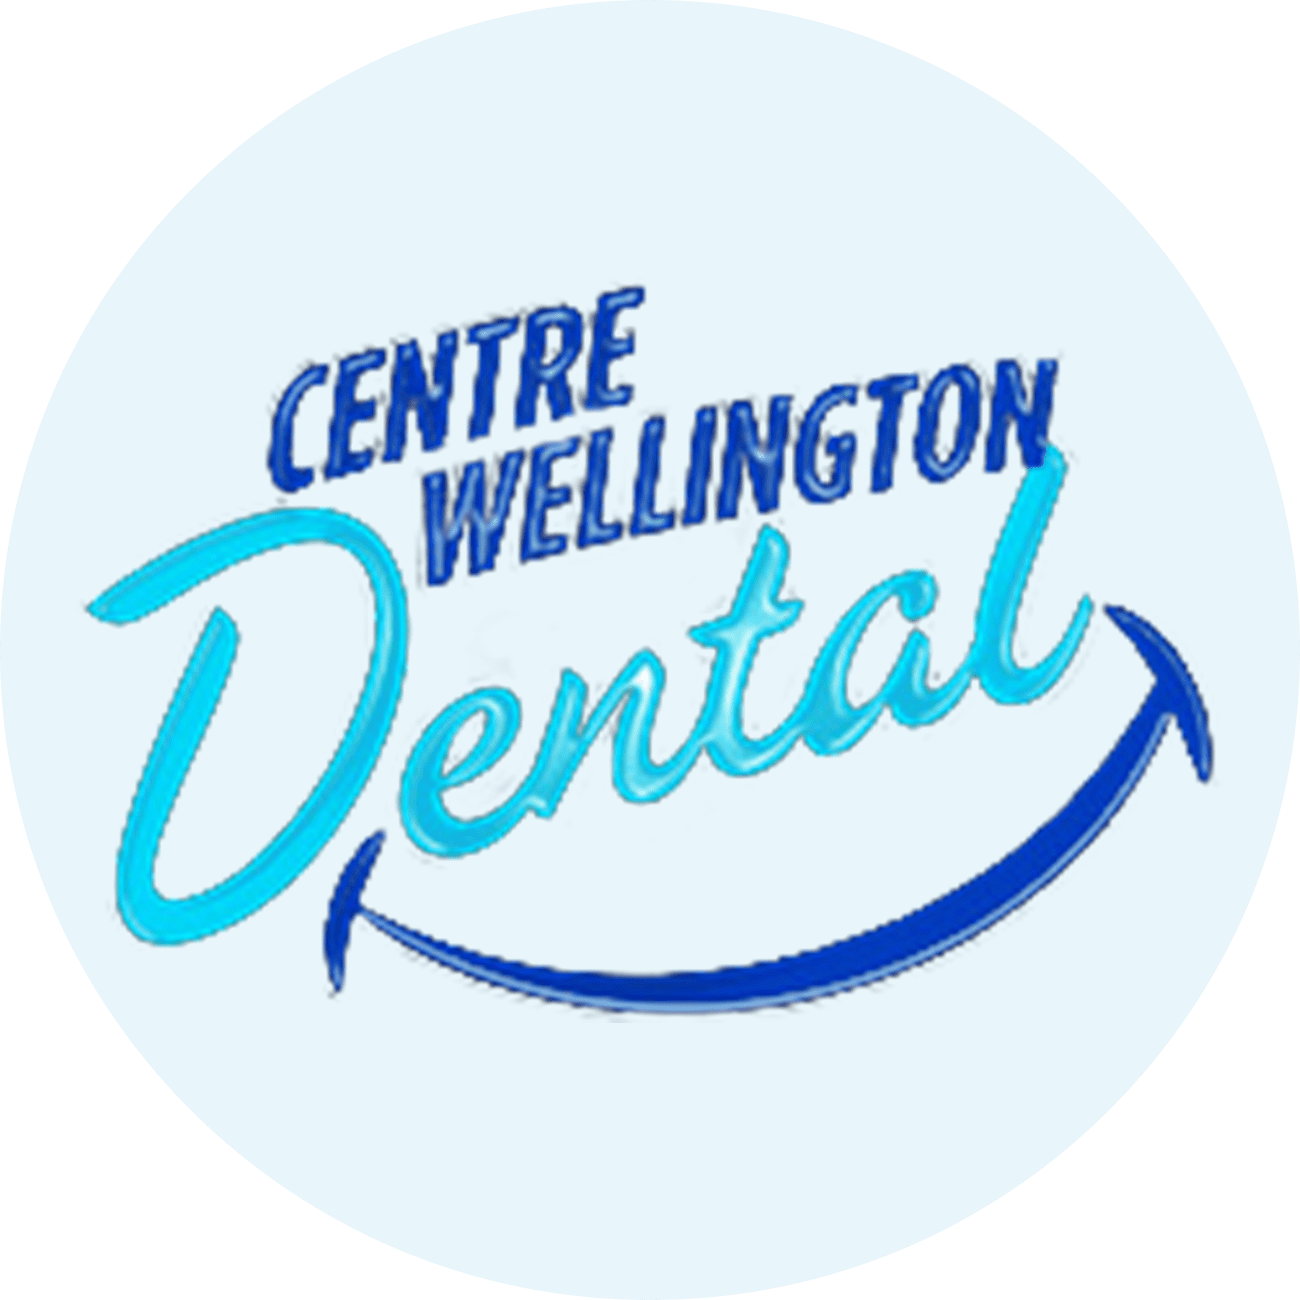 Centre Wellington Dental